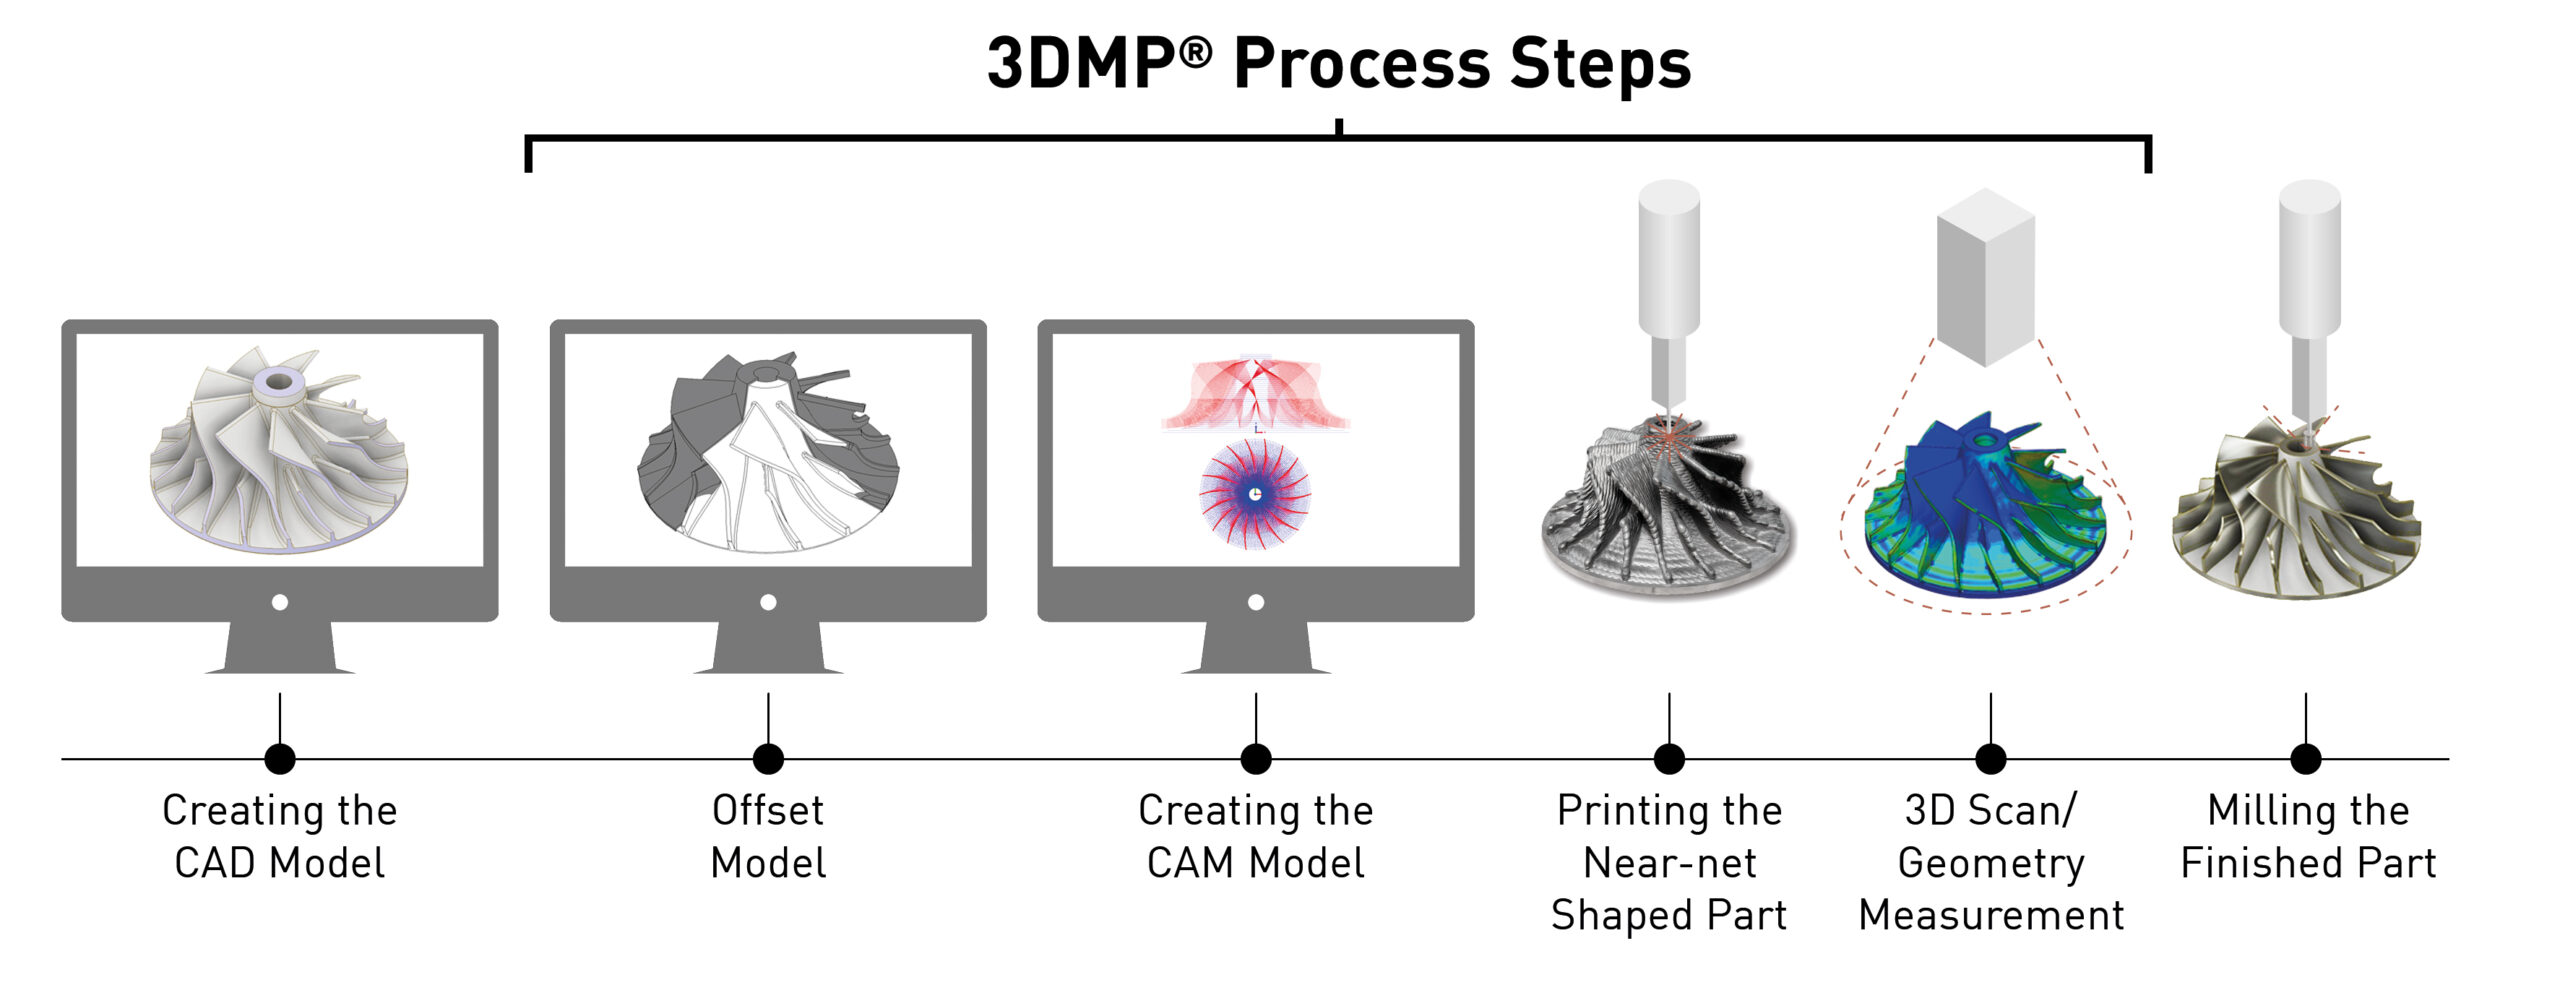 3DMP process chain